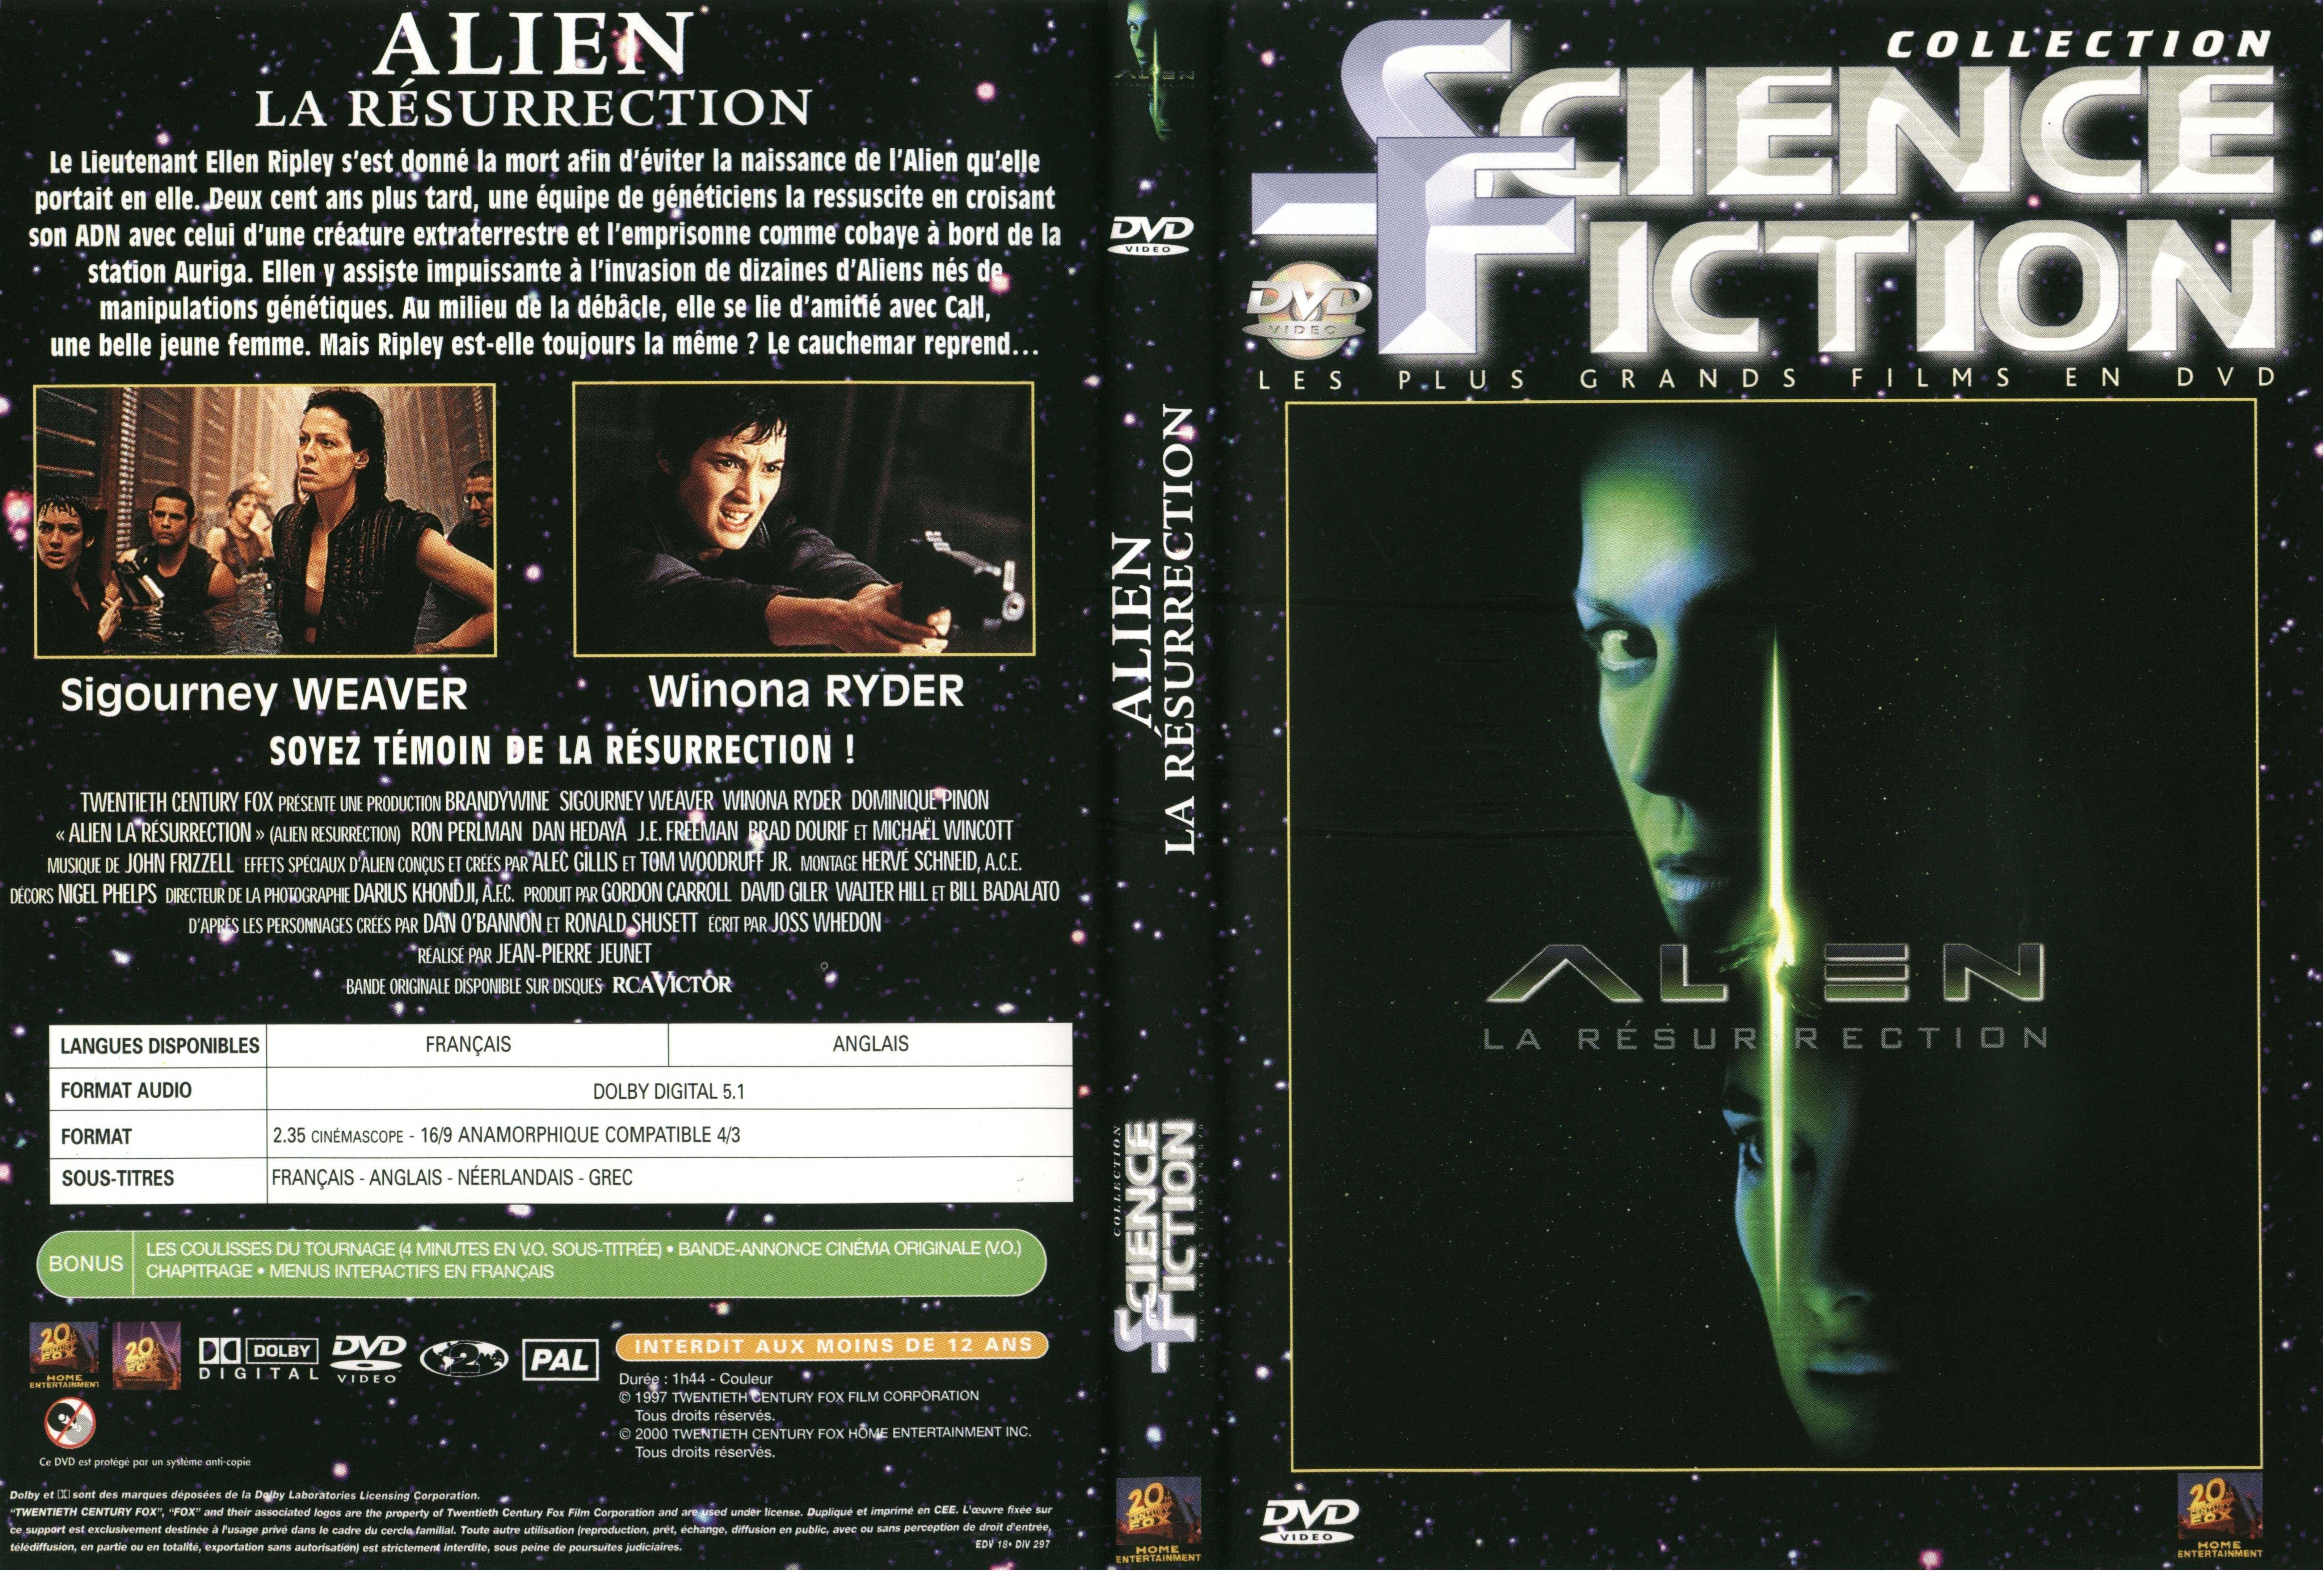 Jaquette DVD Alien Resurrection v3